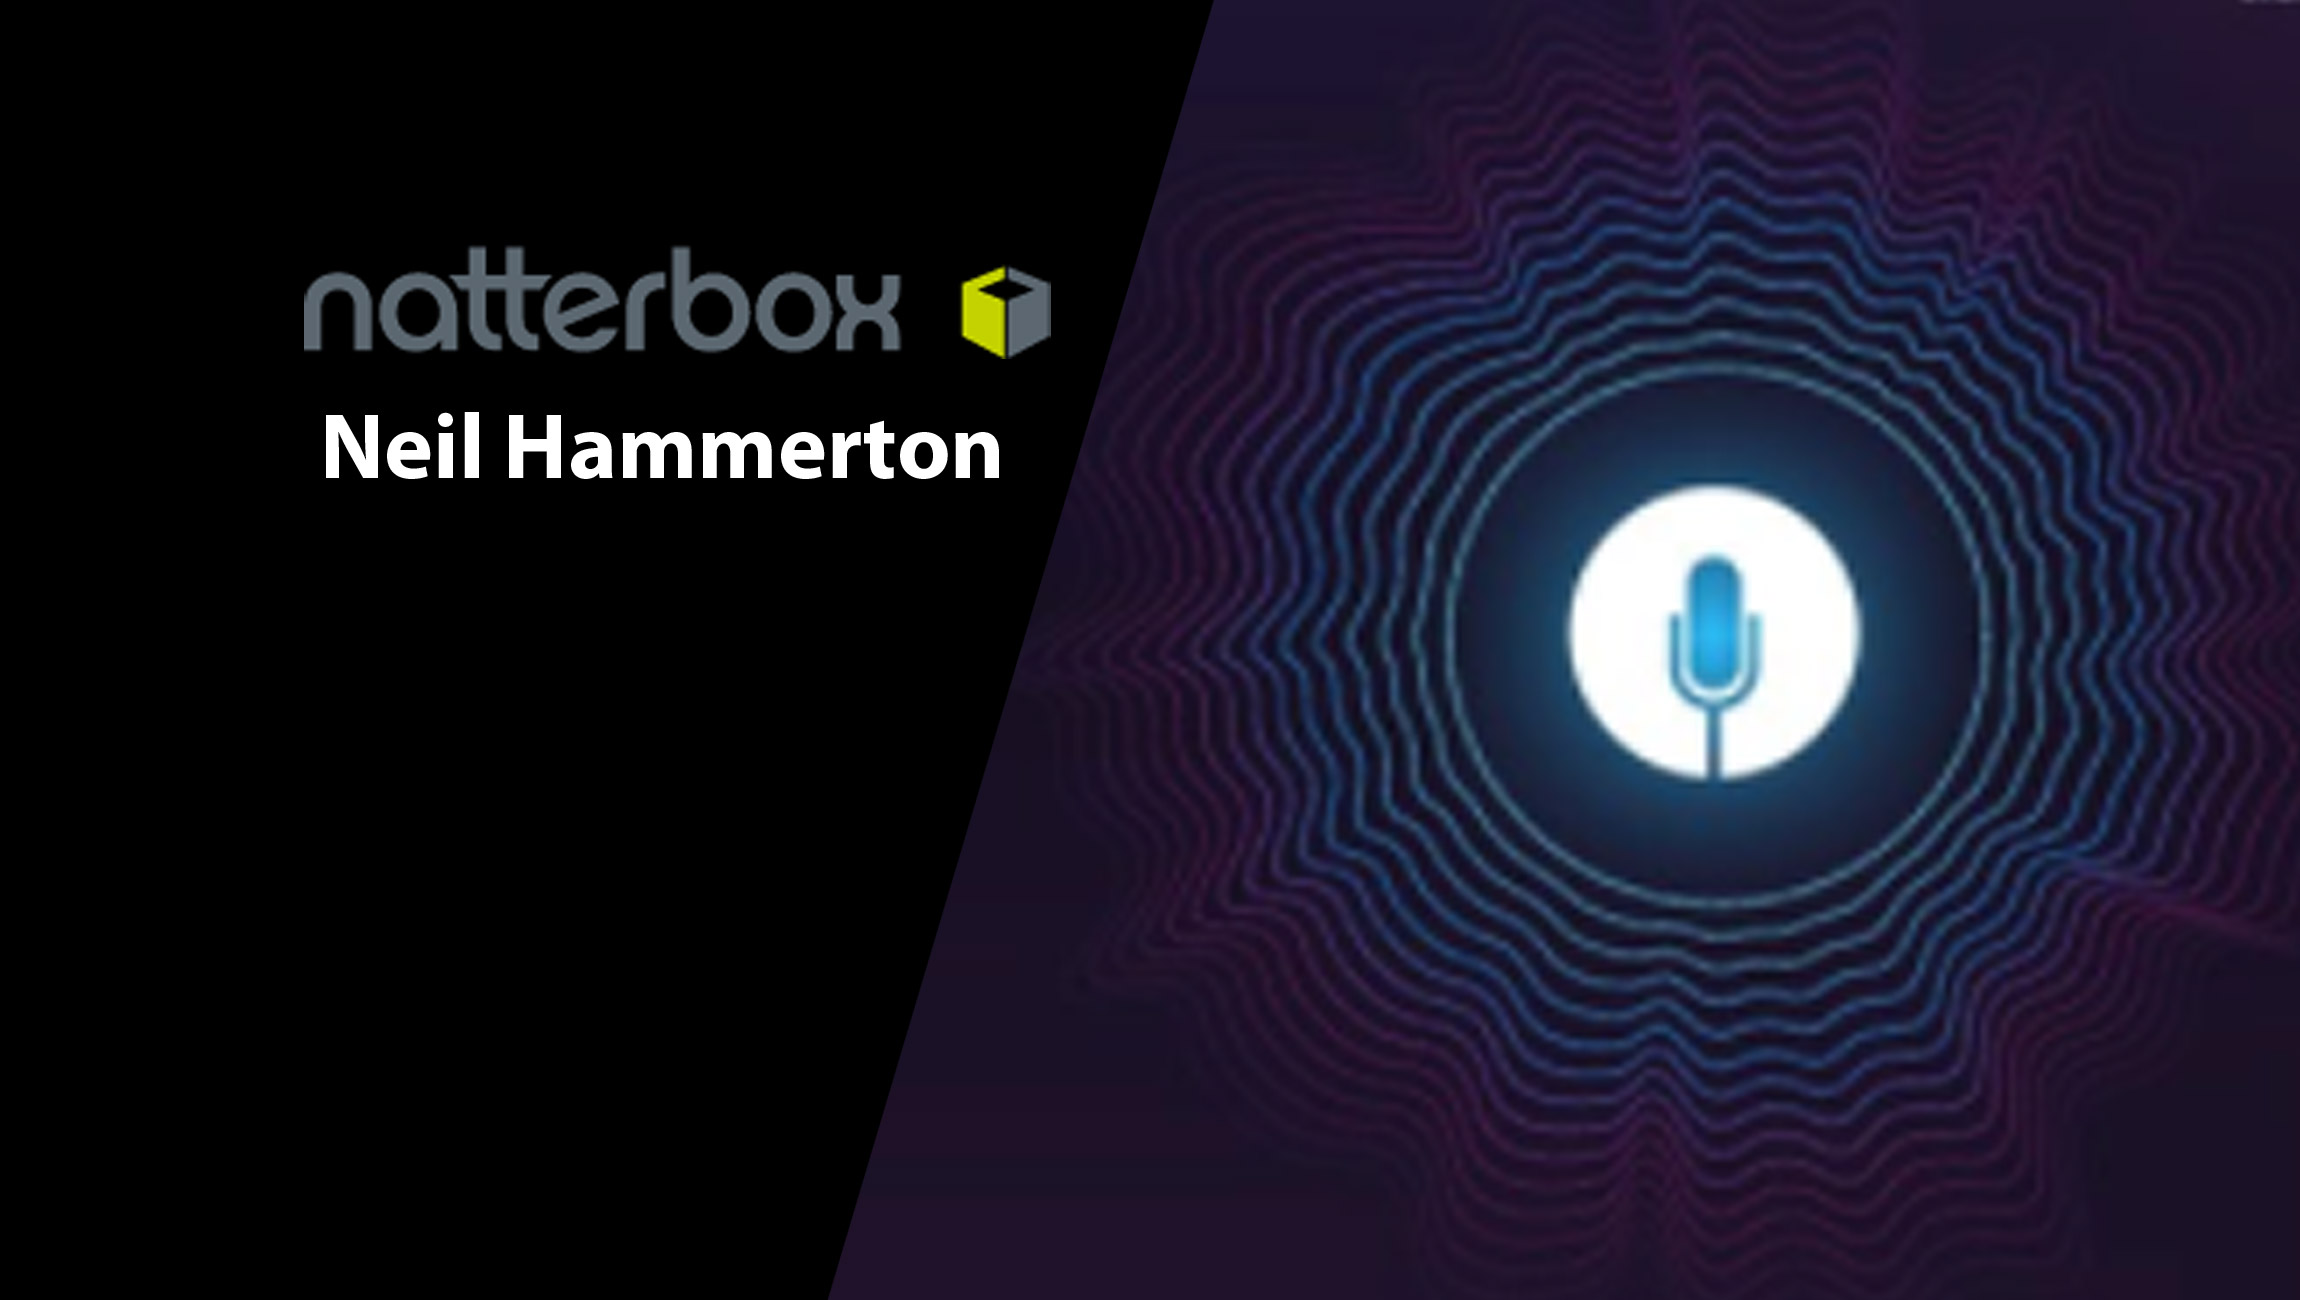 Neil-Hammerton_SalesTechStar-Natterbox